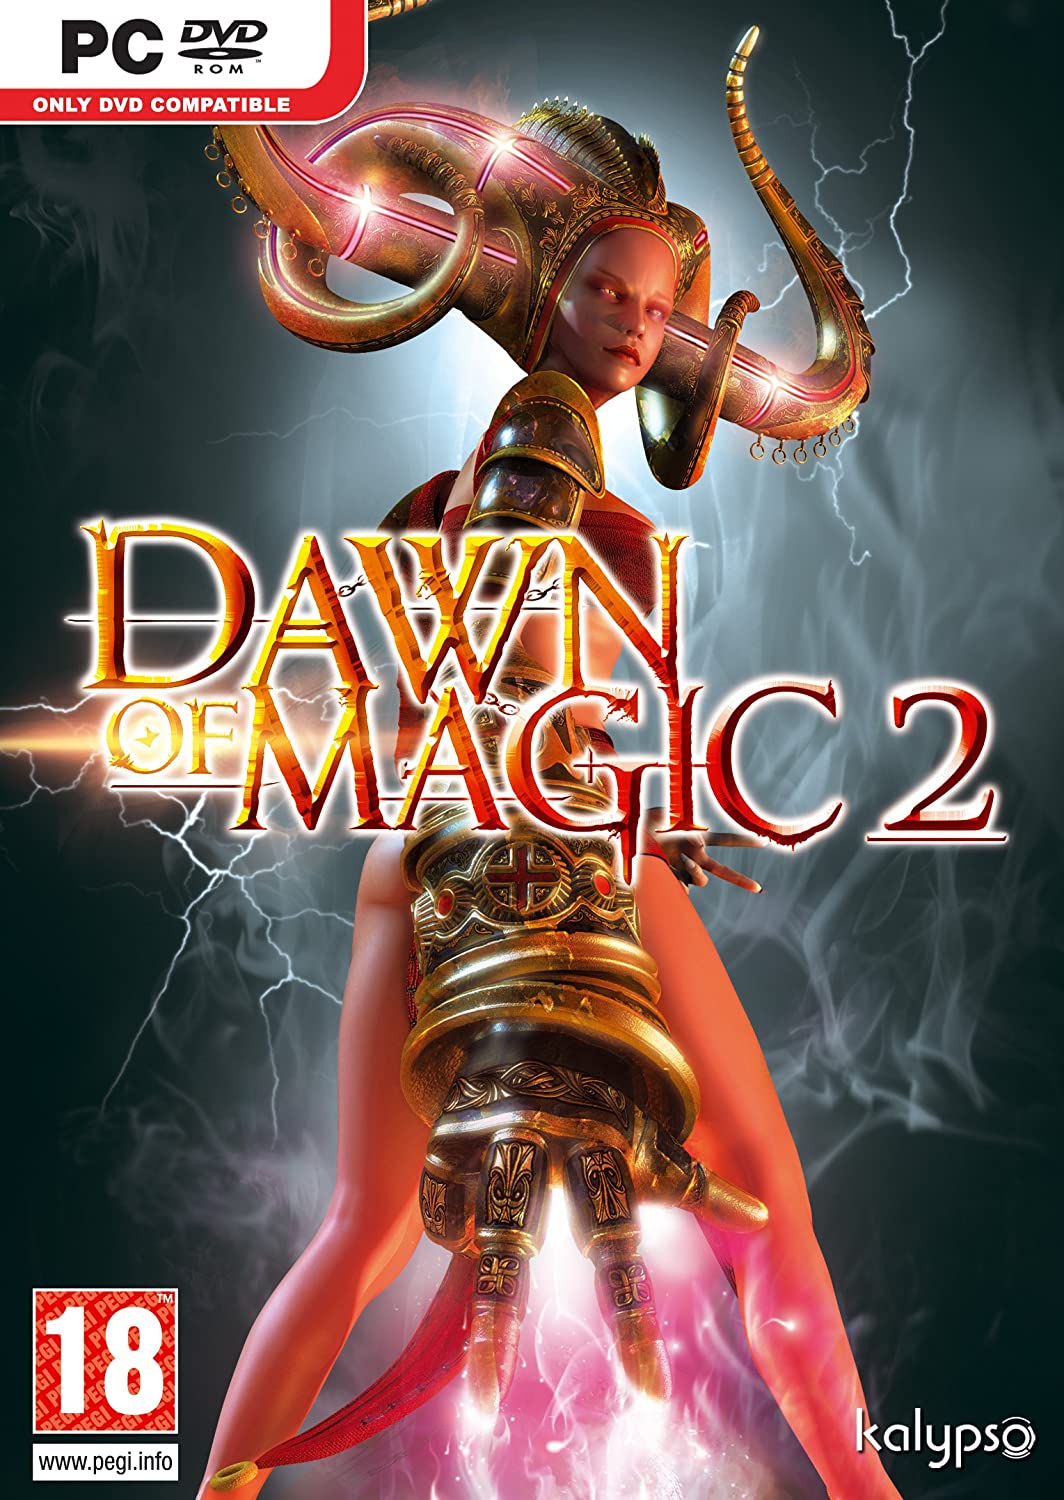 Dawn of Magic 2 (PC DVD)